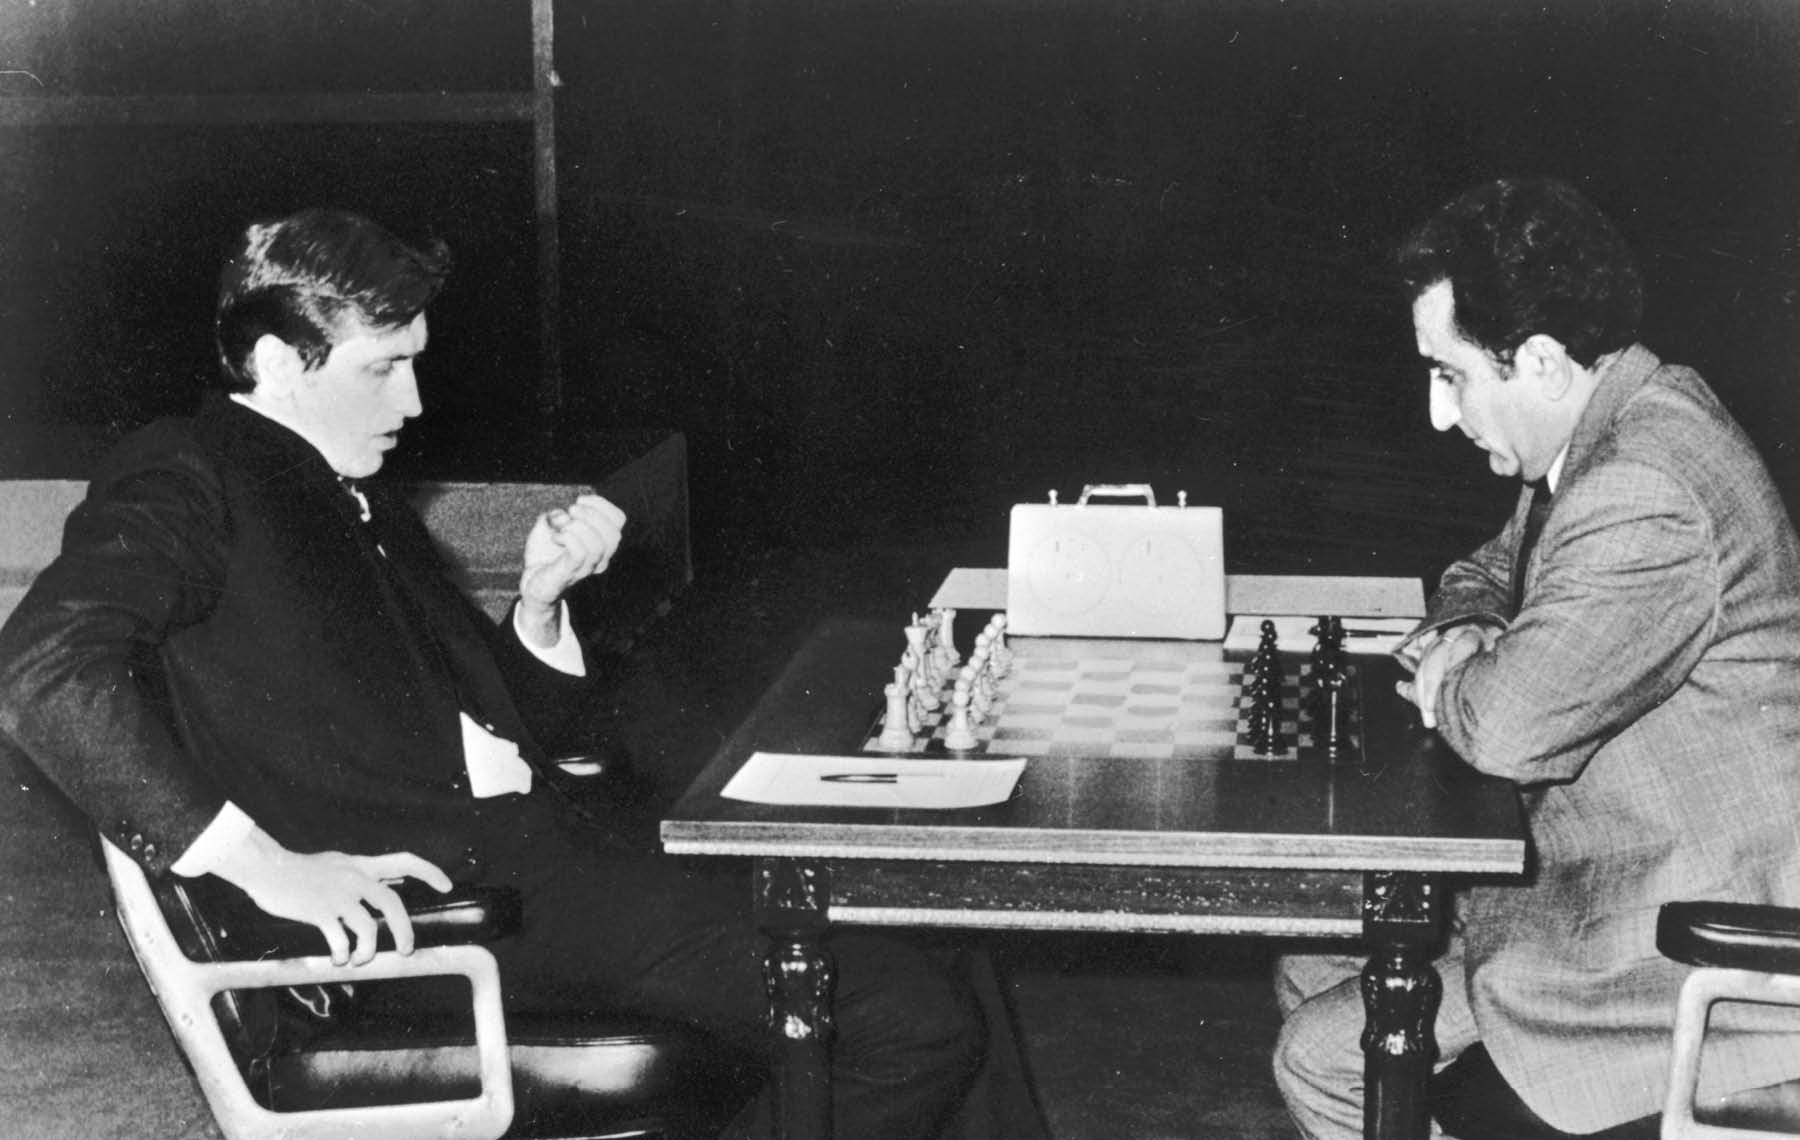 Bobby Fischer rails against U.S., Israel